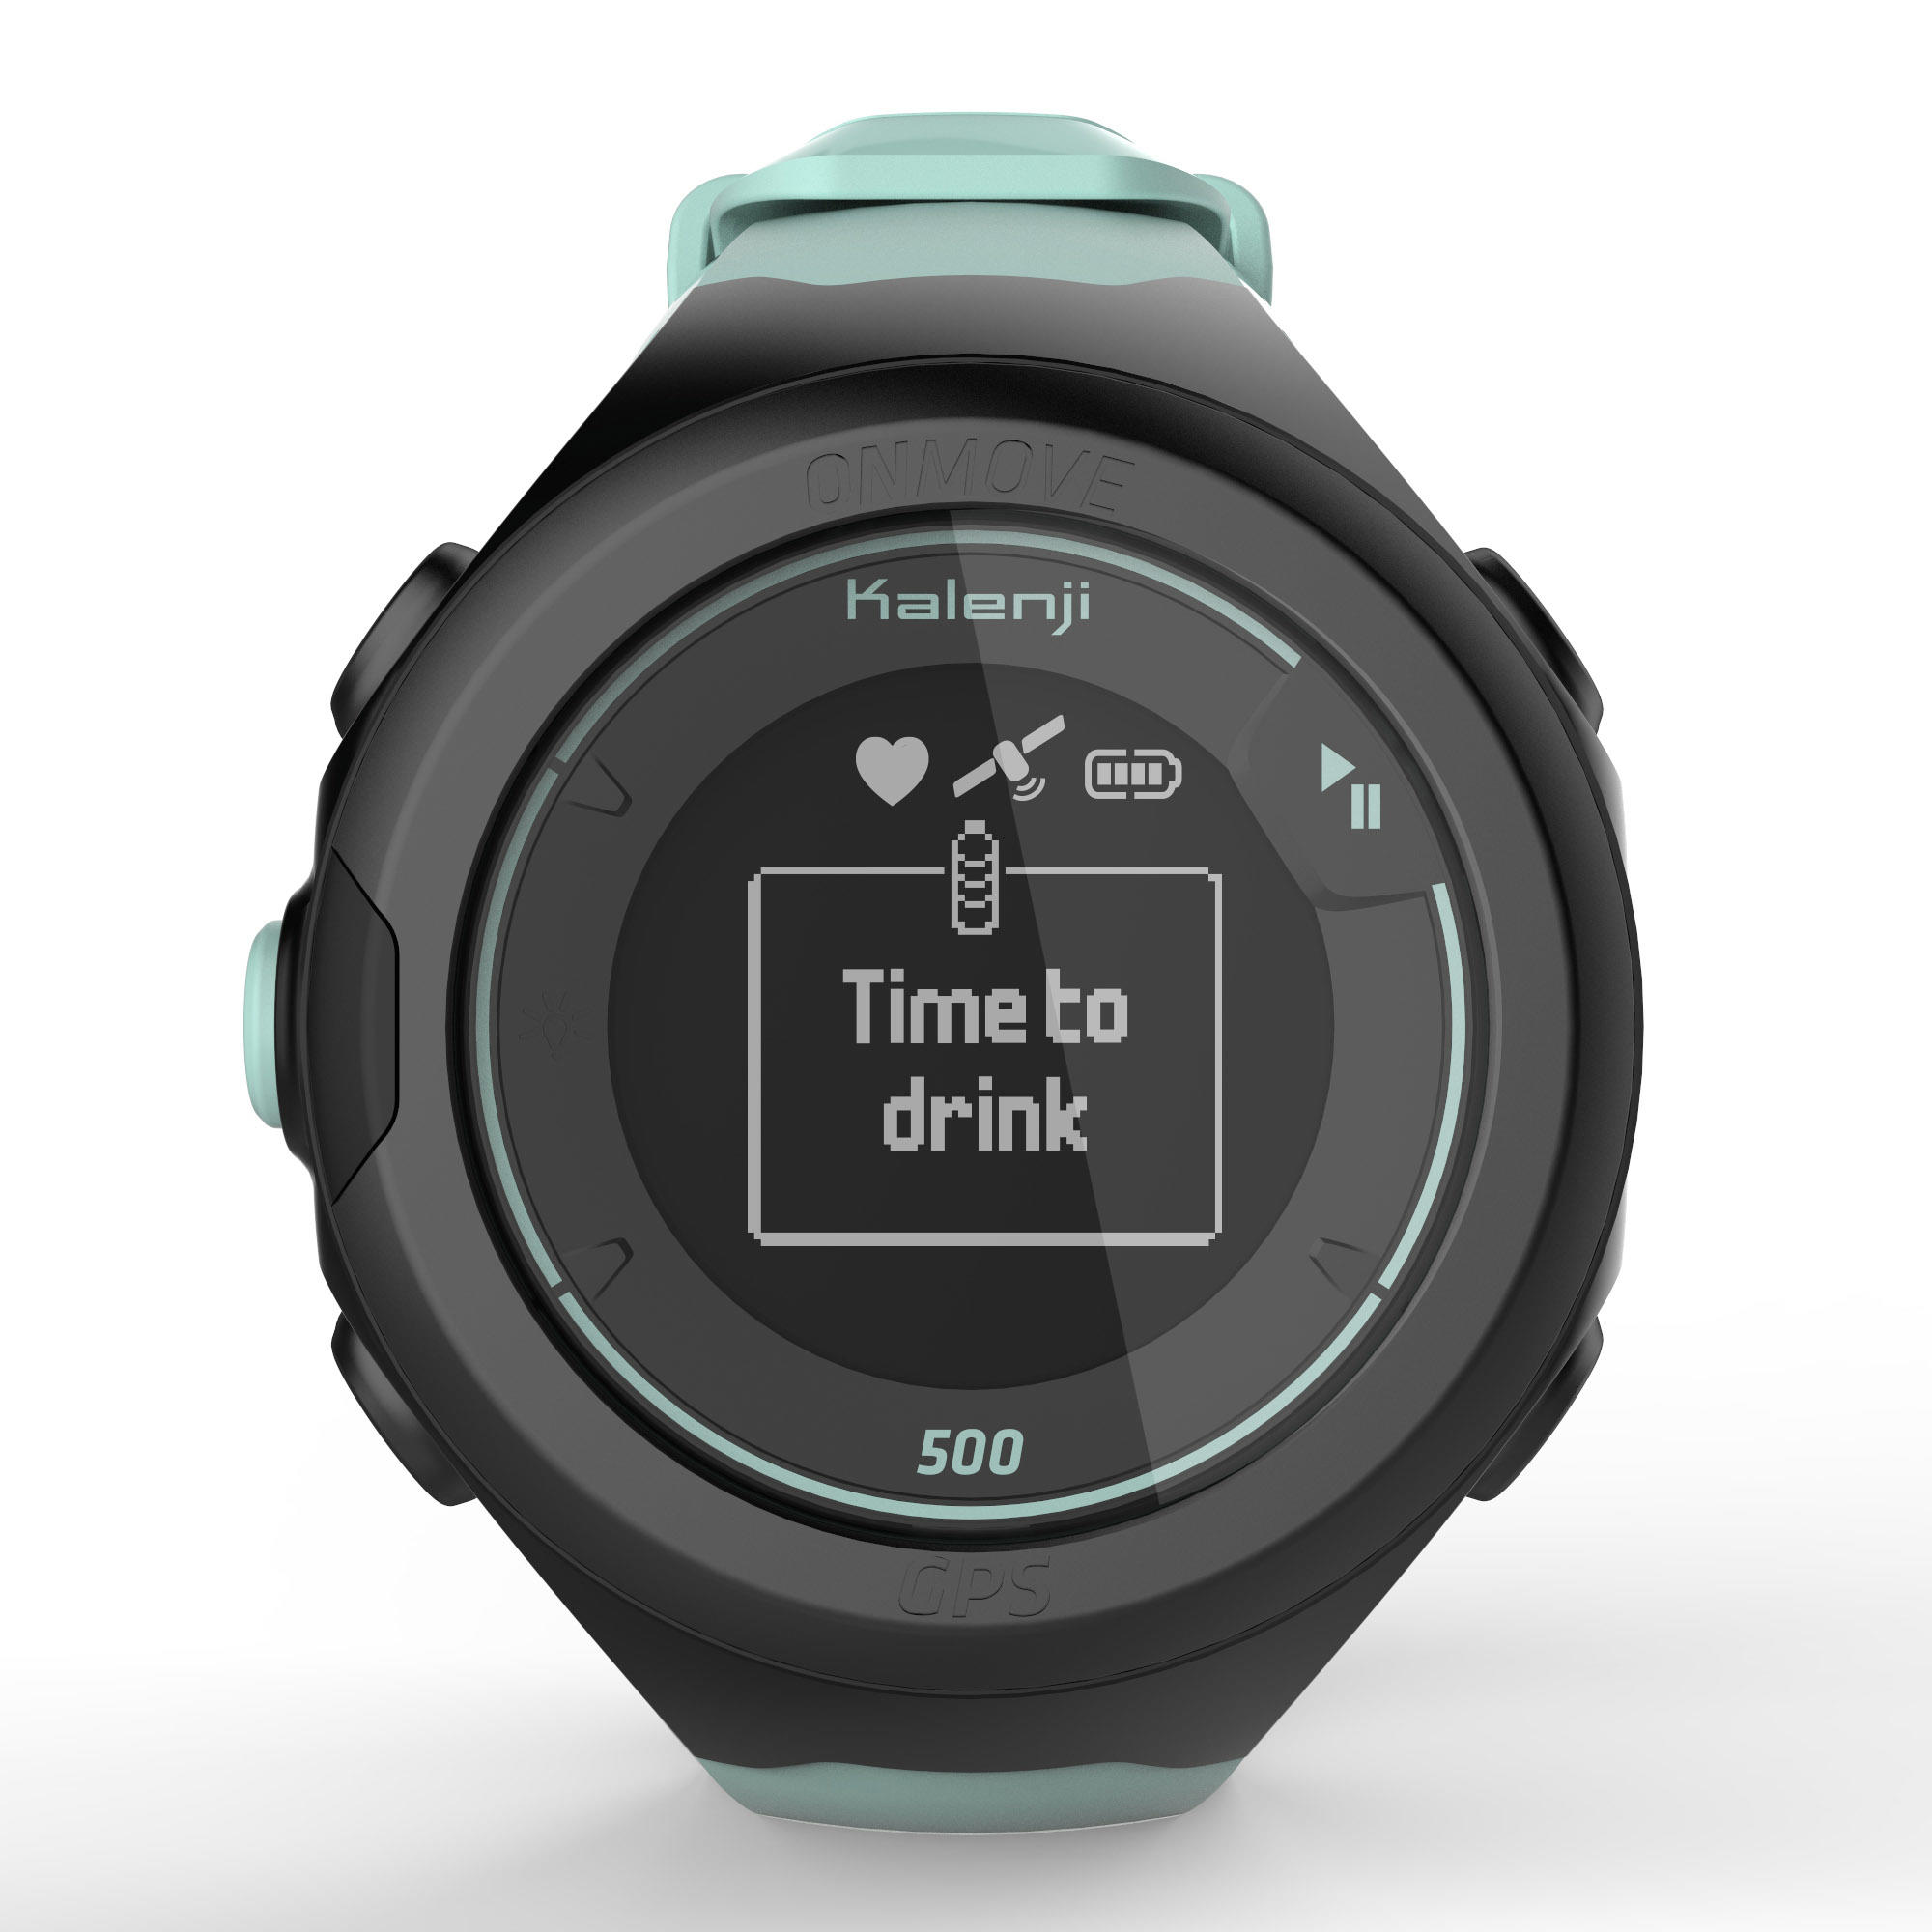 ONmove 500 GPS running watch and wrist heart rate monitor - sea green 10/17